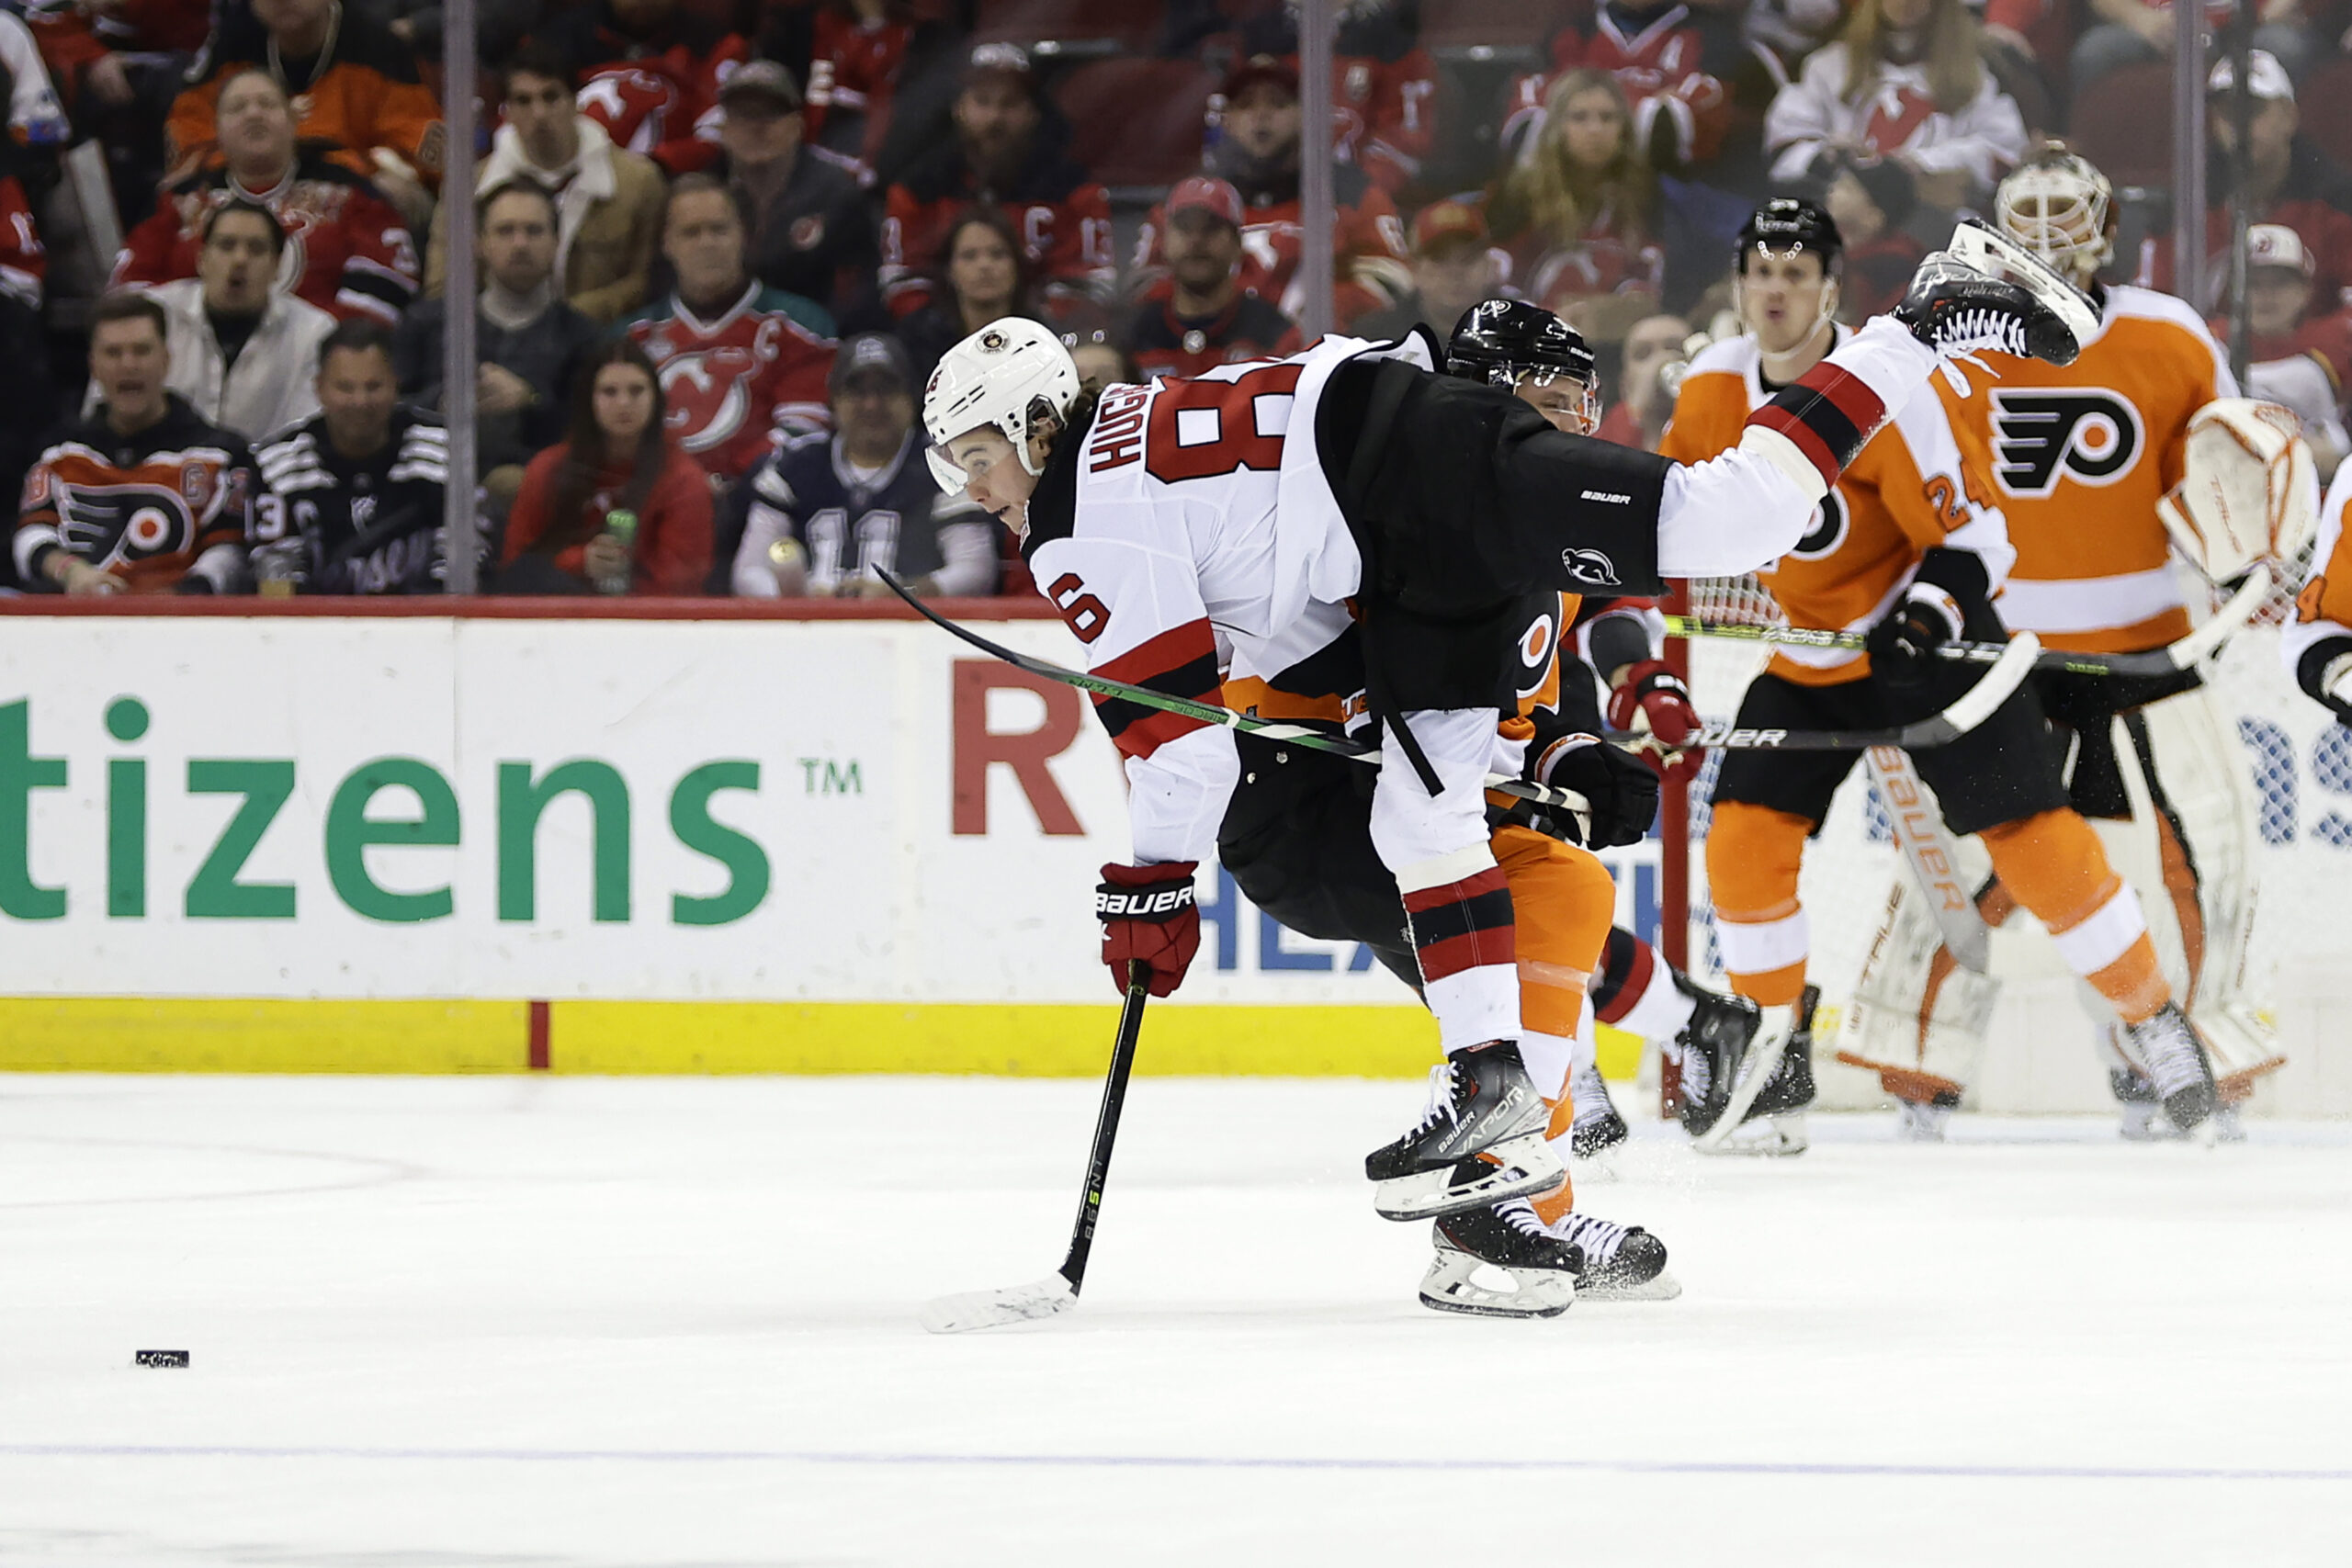 Flyers vs. Devils Photos